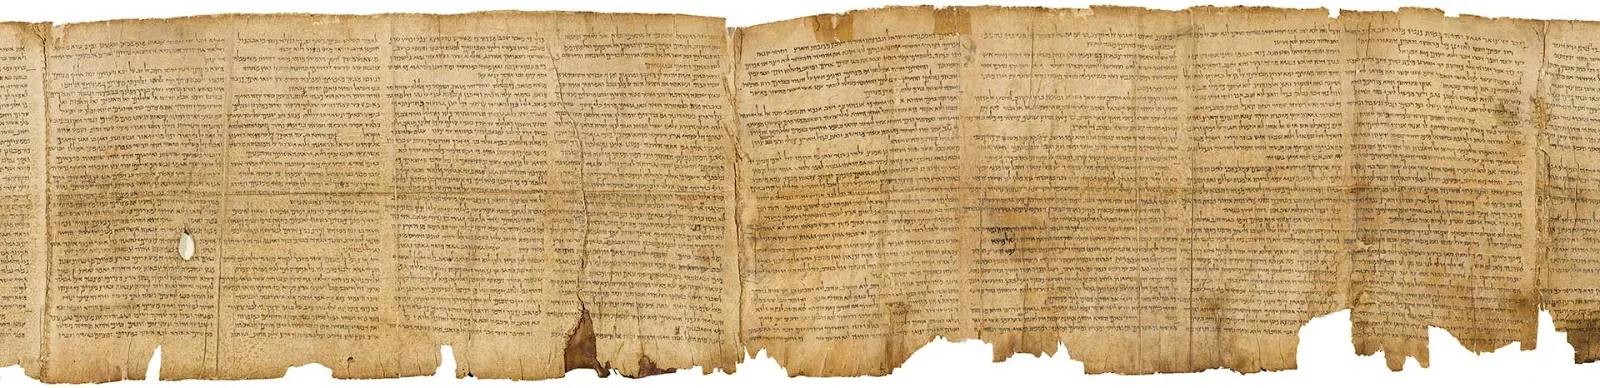 Manuscrito antigo das Sagradas Escrituras